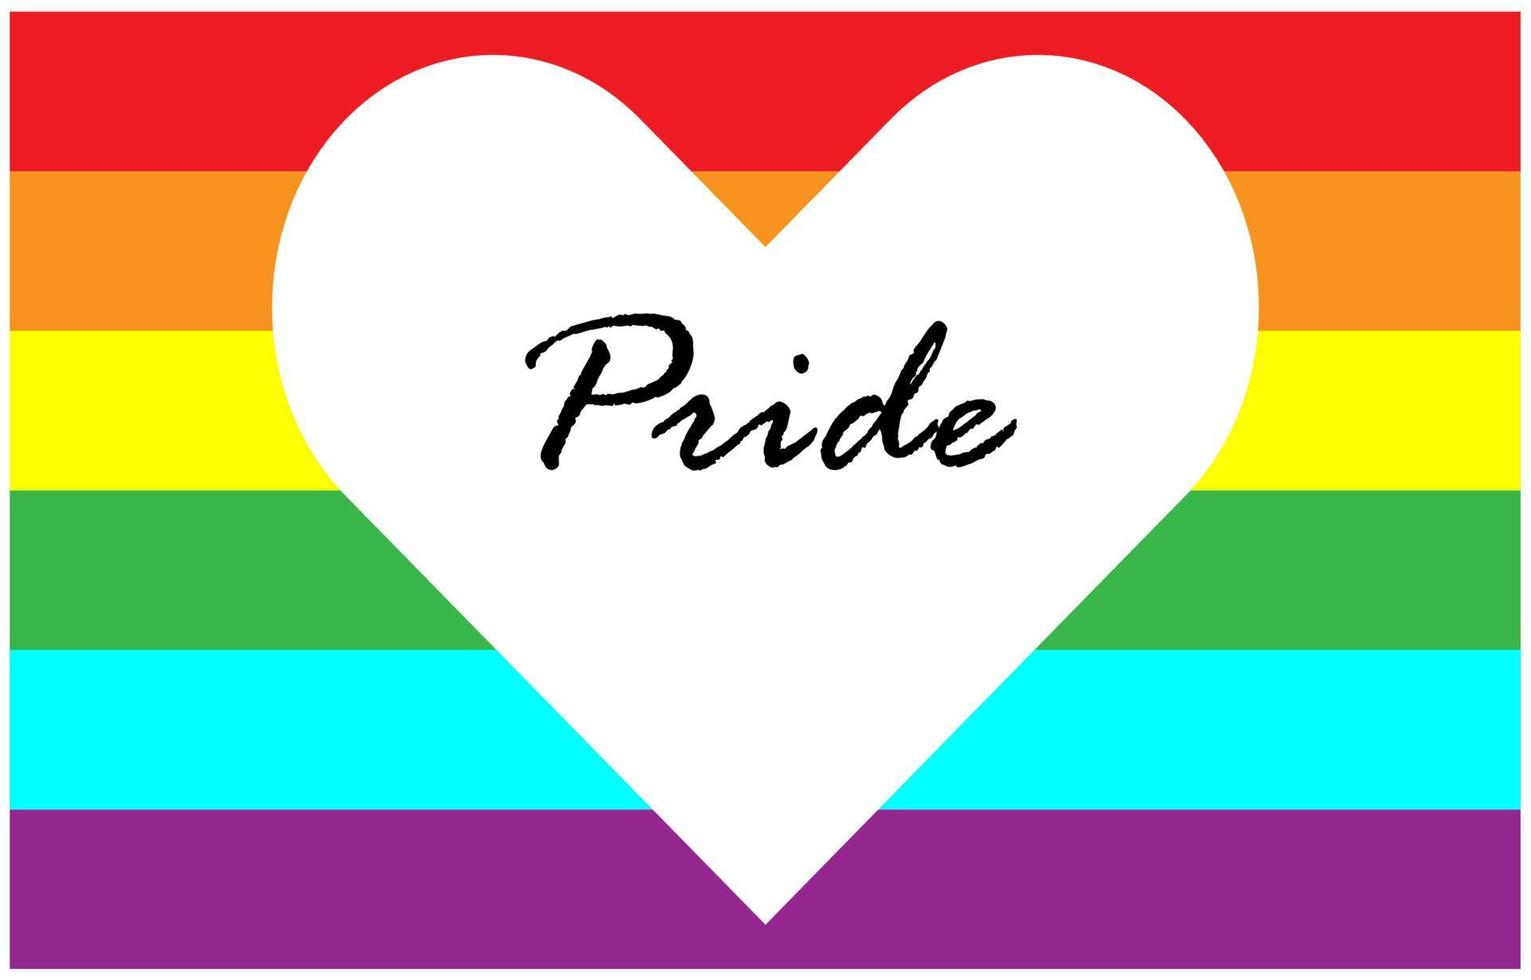 Word Pride in heart shape on LGBT rainbow flag vector